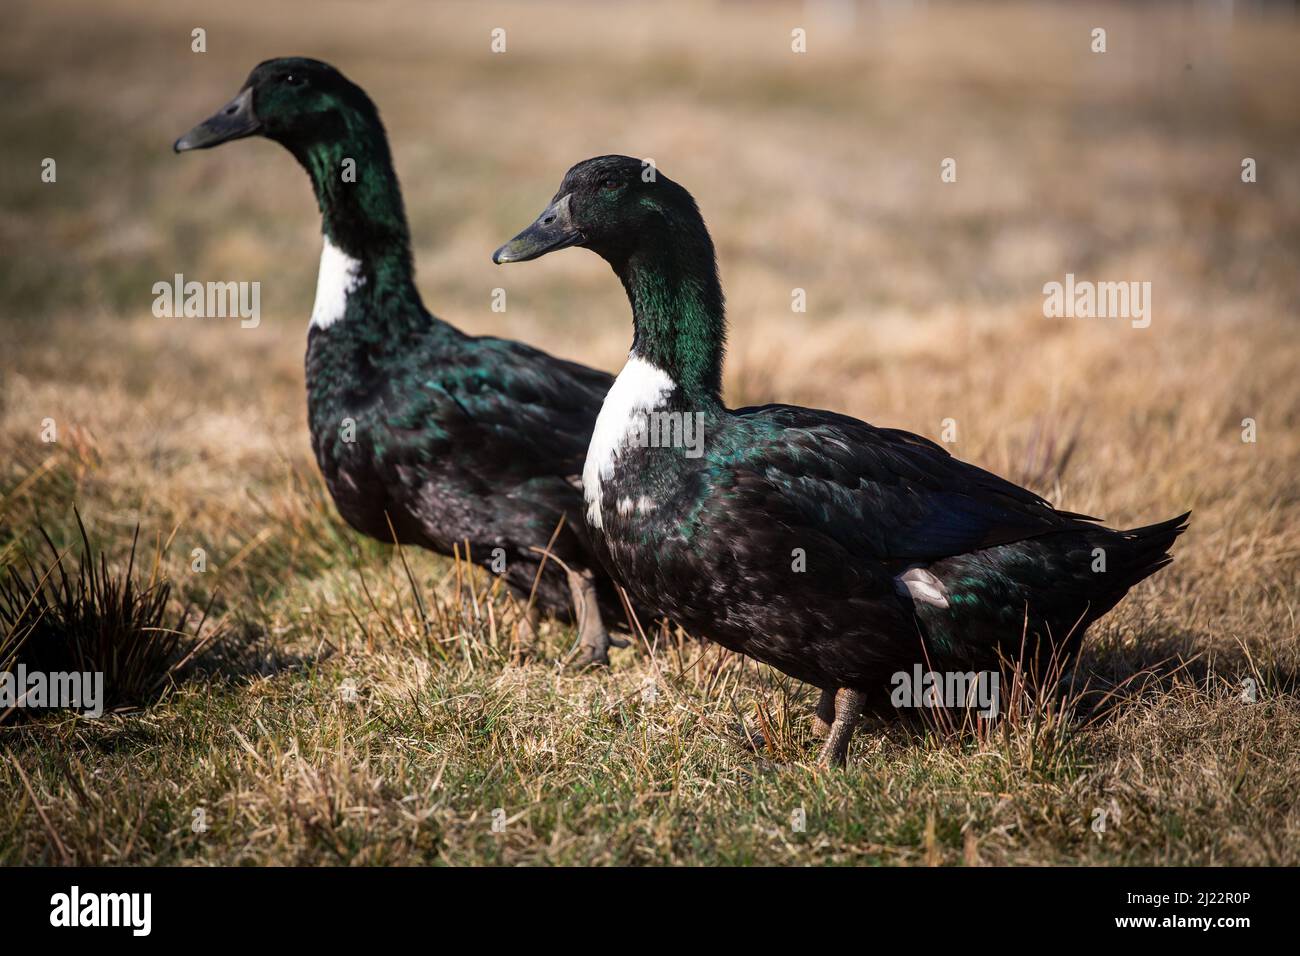 Pommeranian ducks, an endangered duck breed from Germany (Pommernenten) Stock Photo